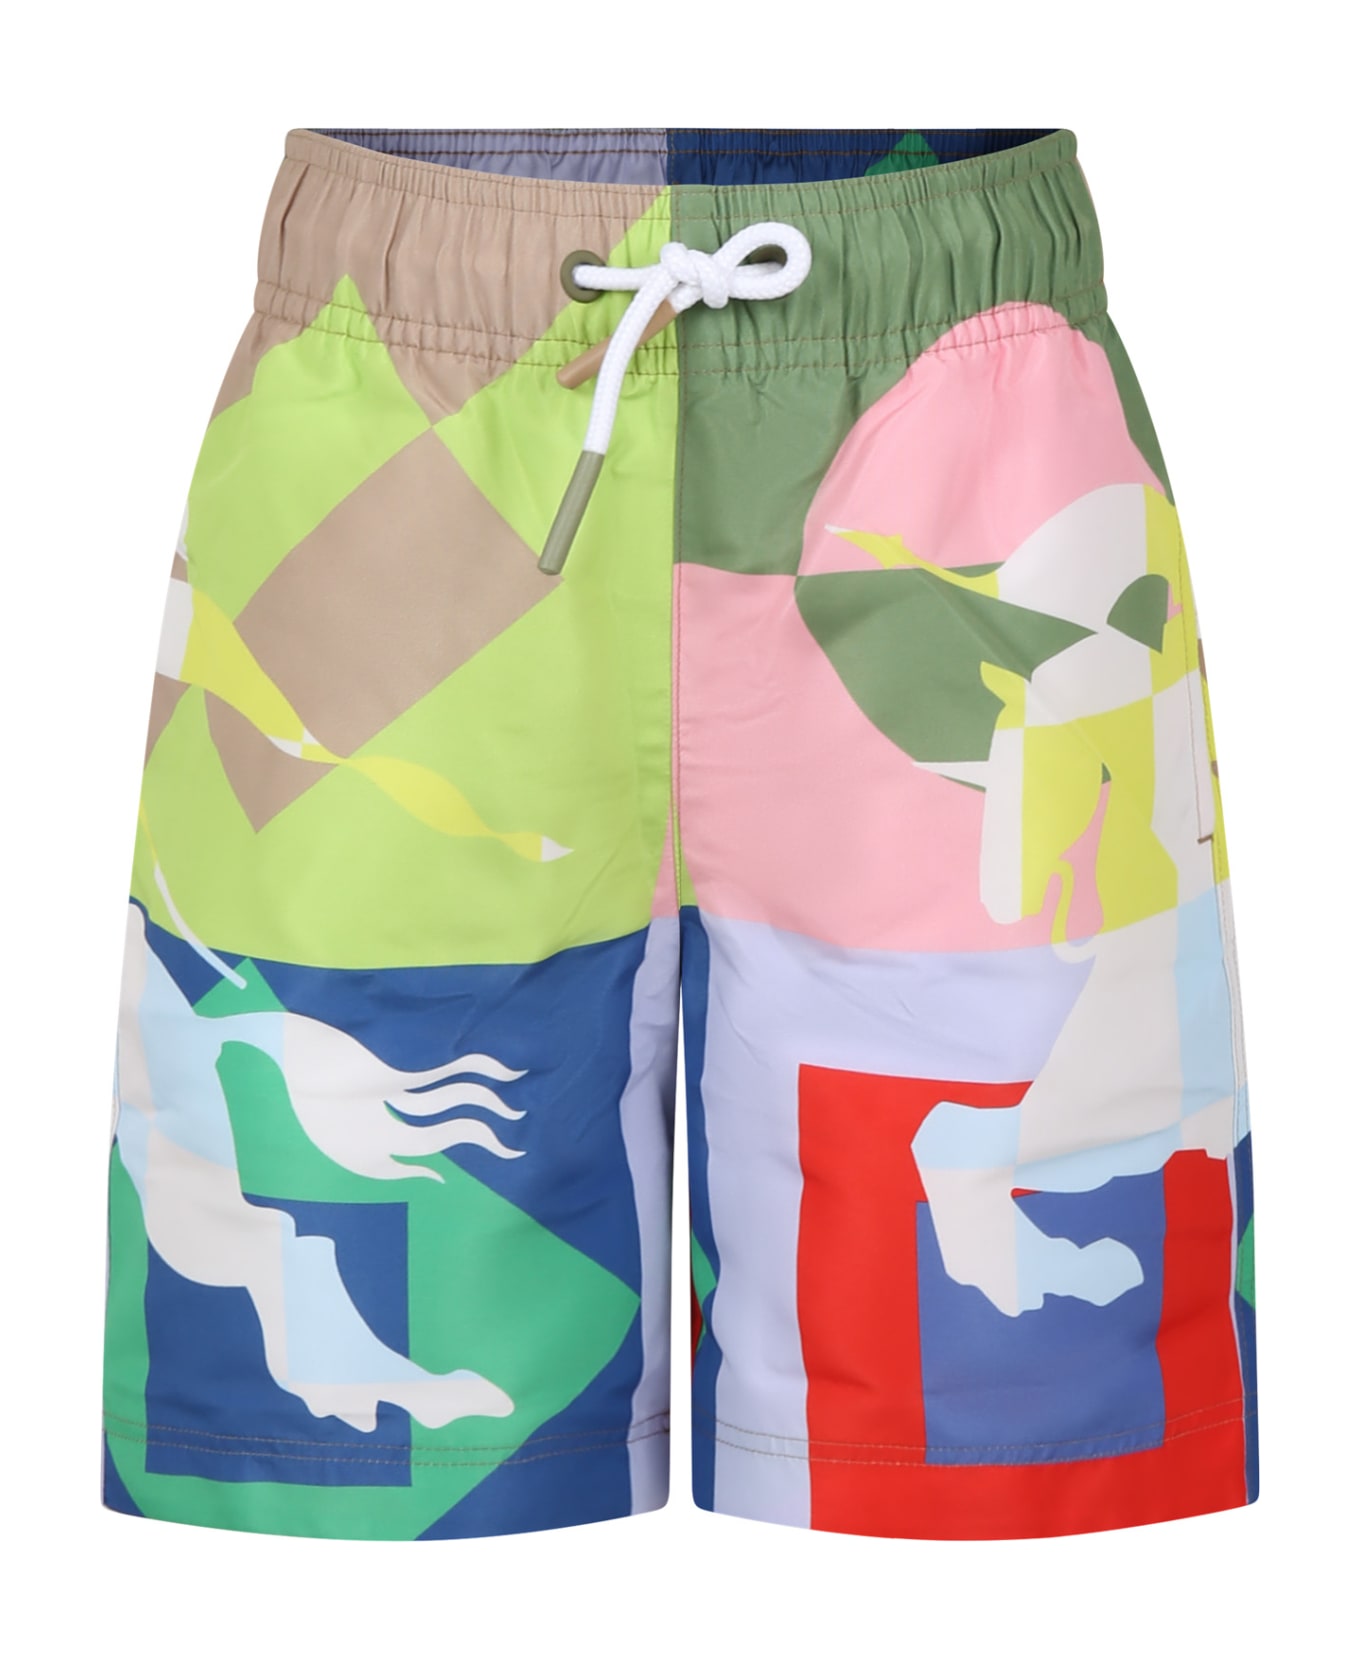 Burberry Multicolor Swim Shorts For Boy With Equestrian Knight - Multicolor